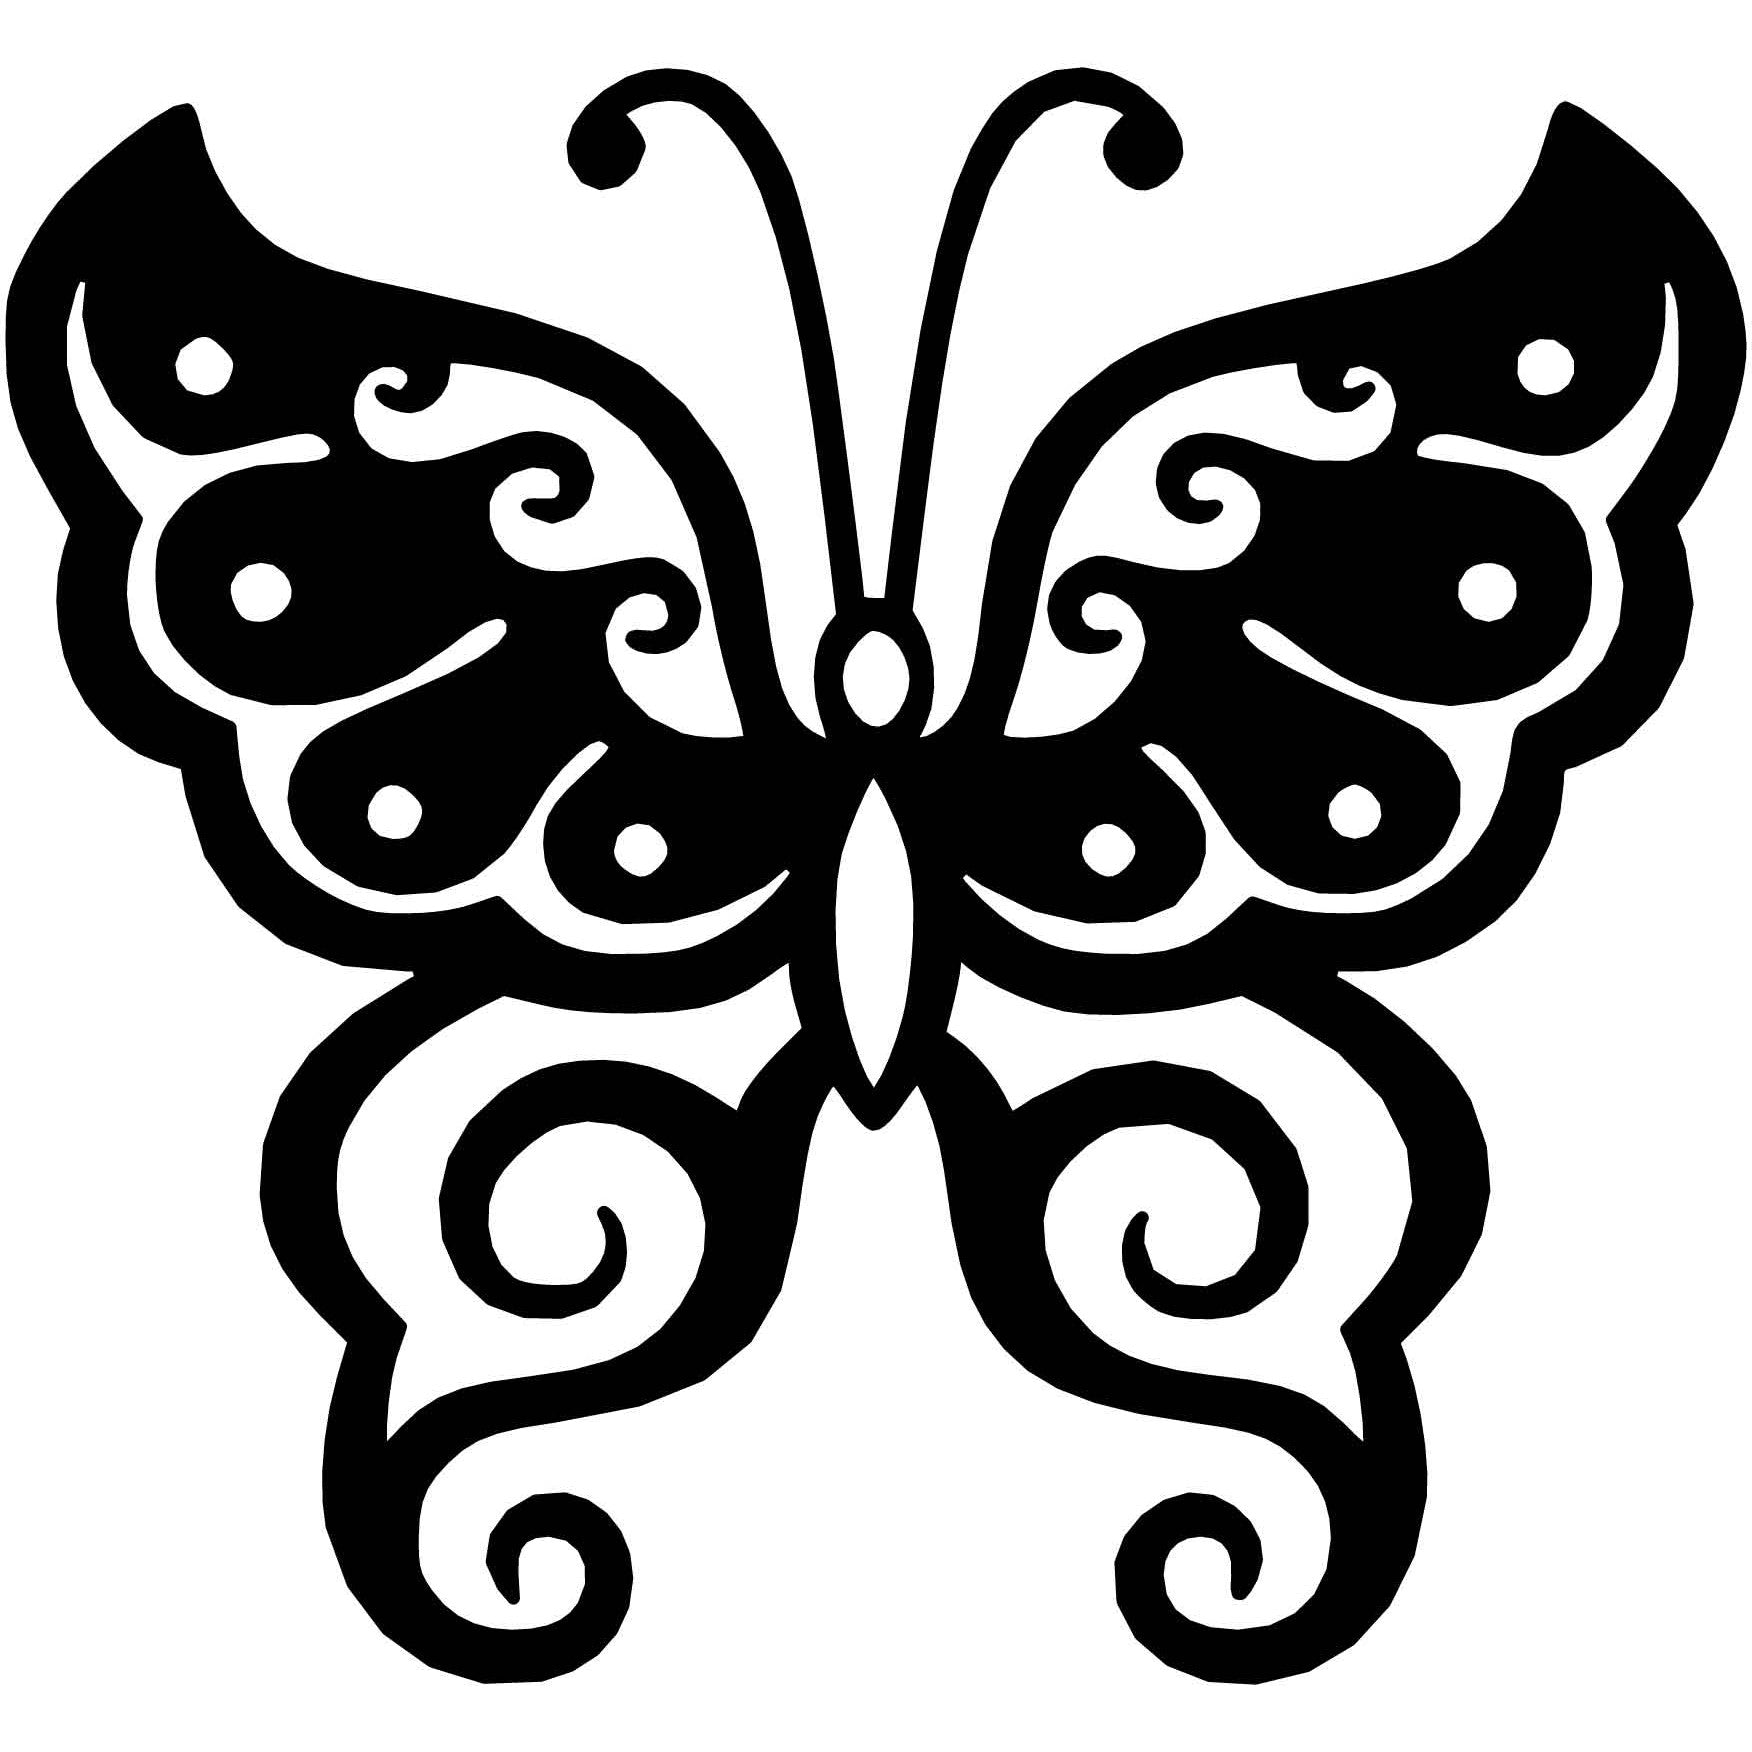 Butterfly Ornaments Decor-Free DXF files Cut Ready CNC Designs-dxfforcnc.com